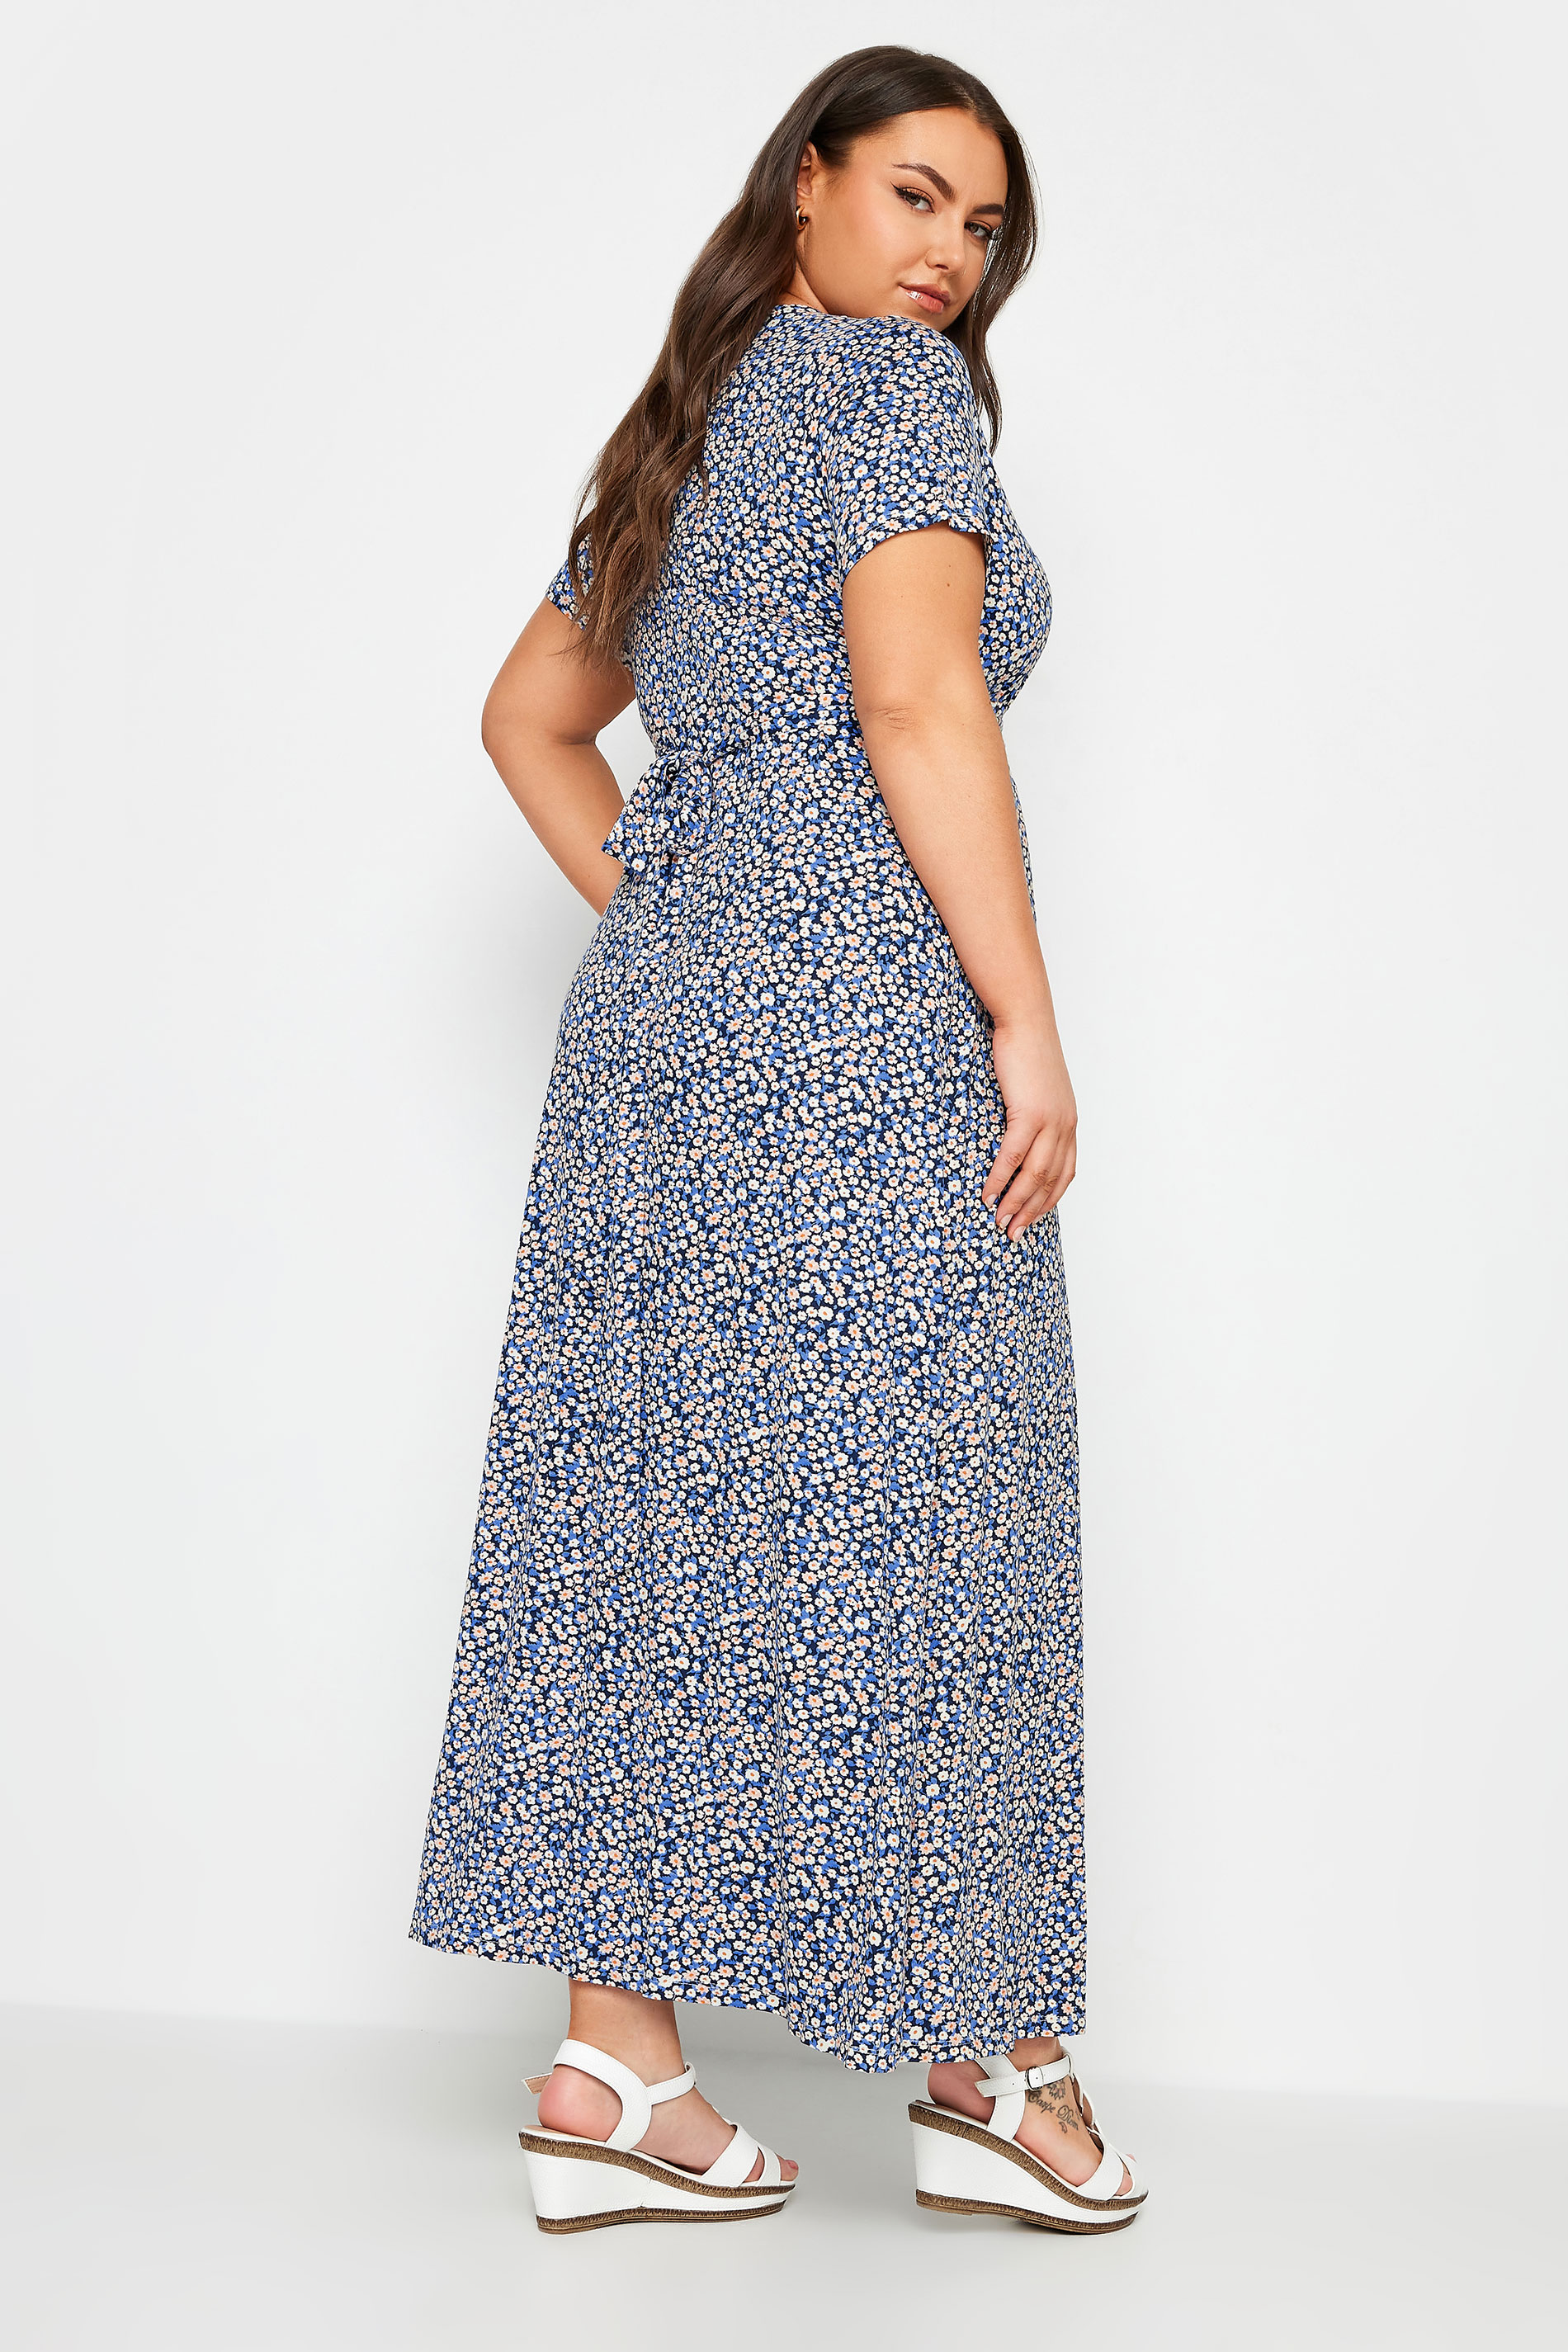 YOURS Plus Size Blue Floral Maxi Wrap Dress | Ypurs Clothing 3